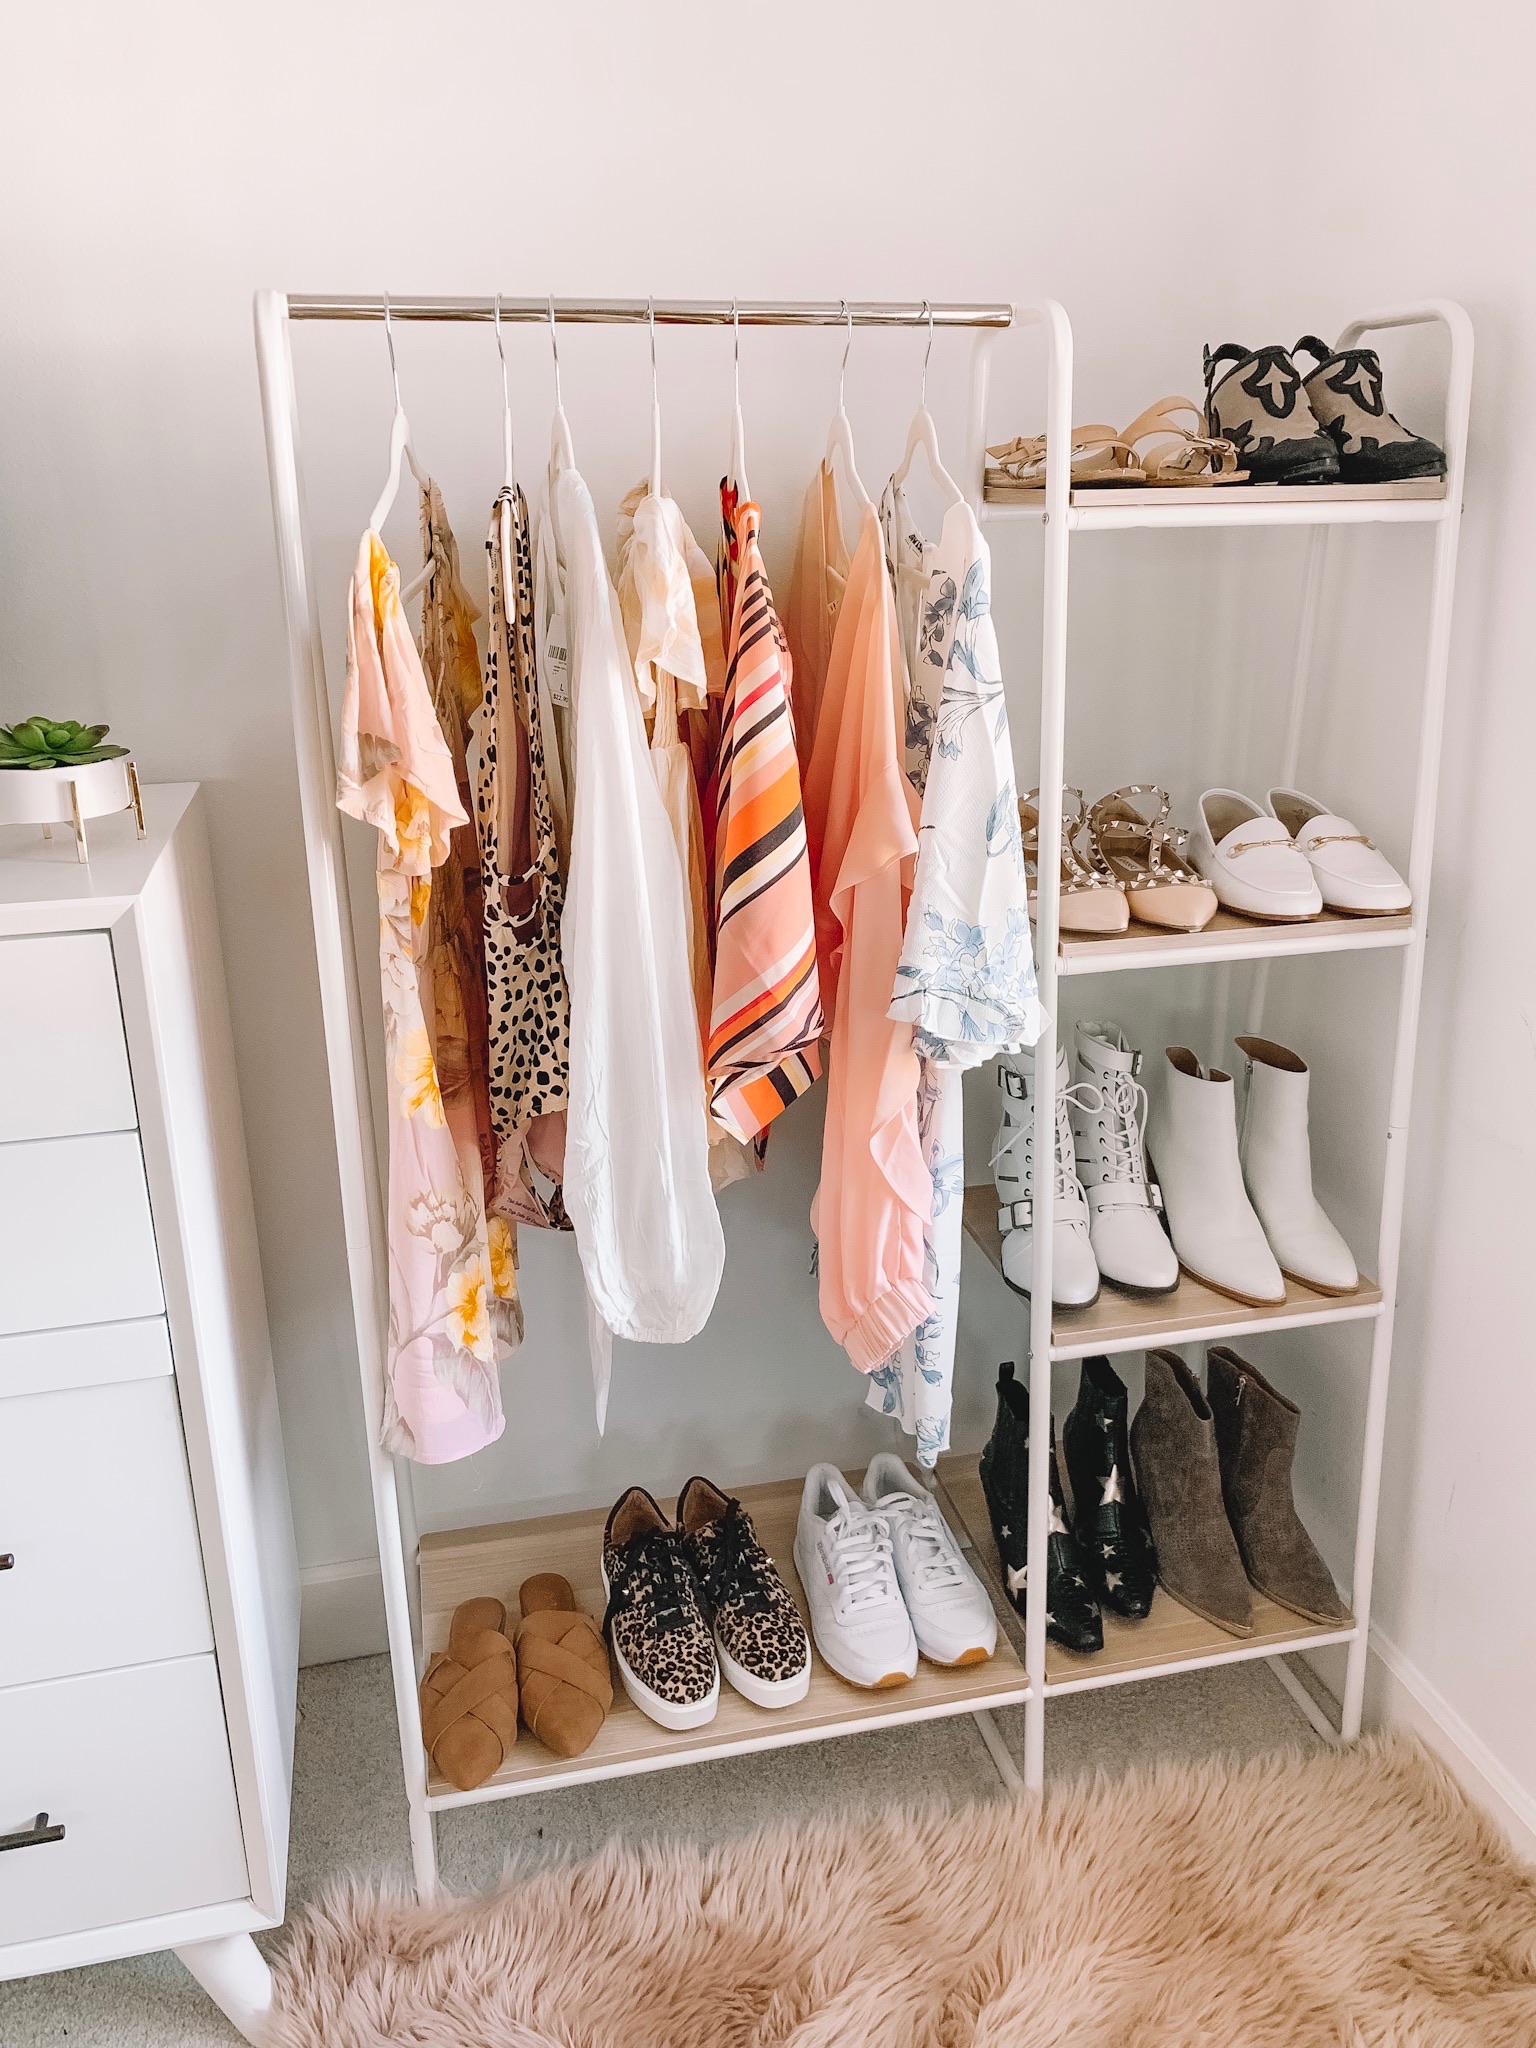 Clothing Rack with Shelves - CLoset organization - Bedroom Ideas